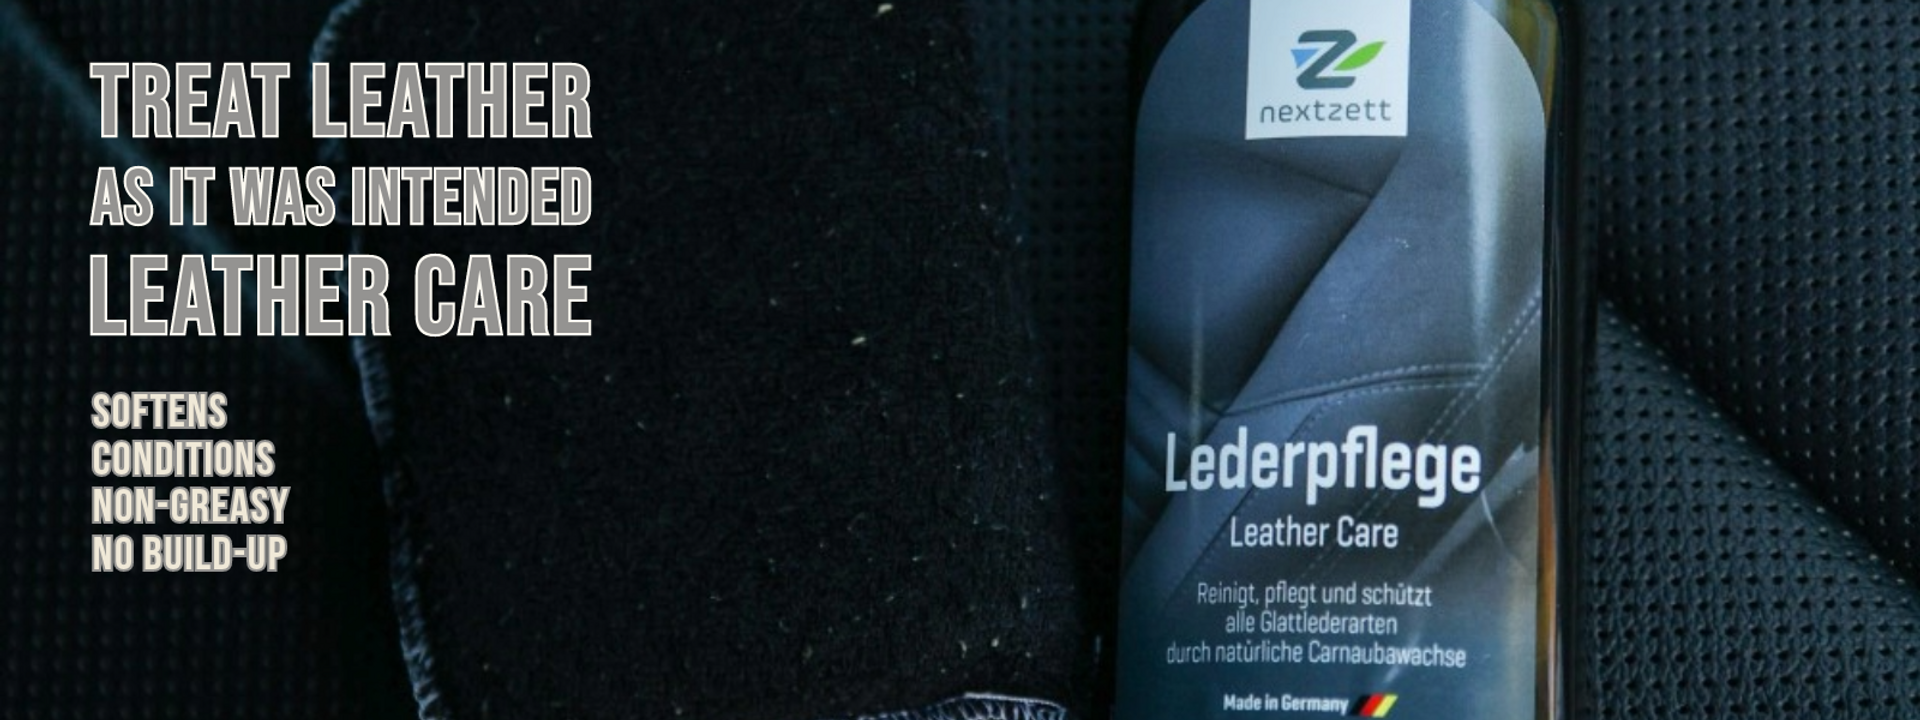 nextzett Leather Care Cleaner and Conditioner